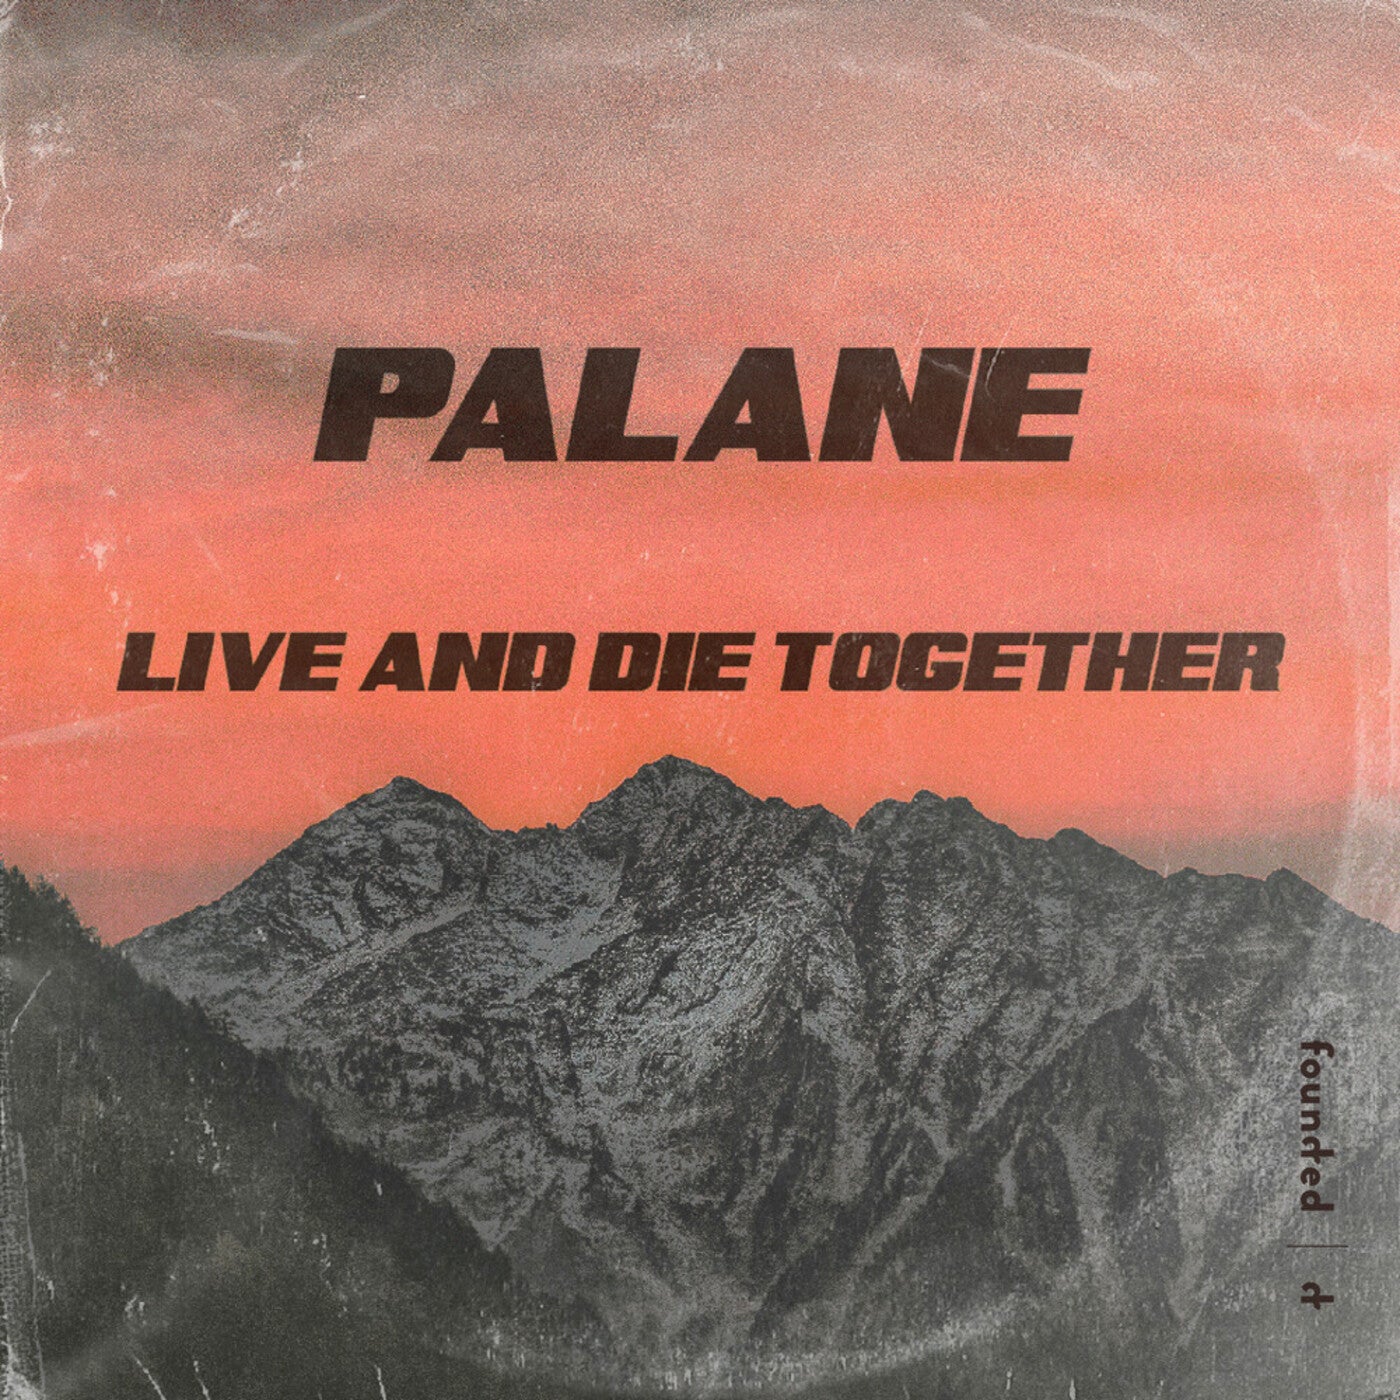 Palane music download - Beatport